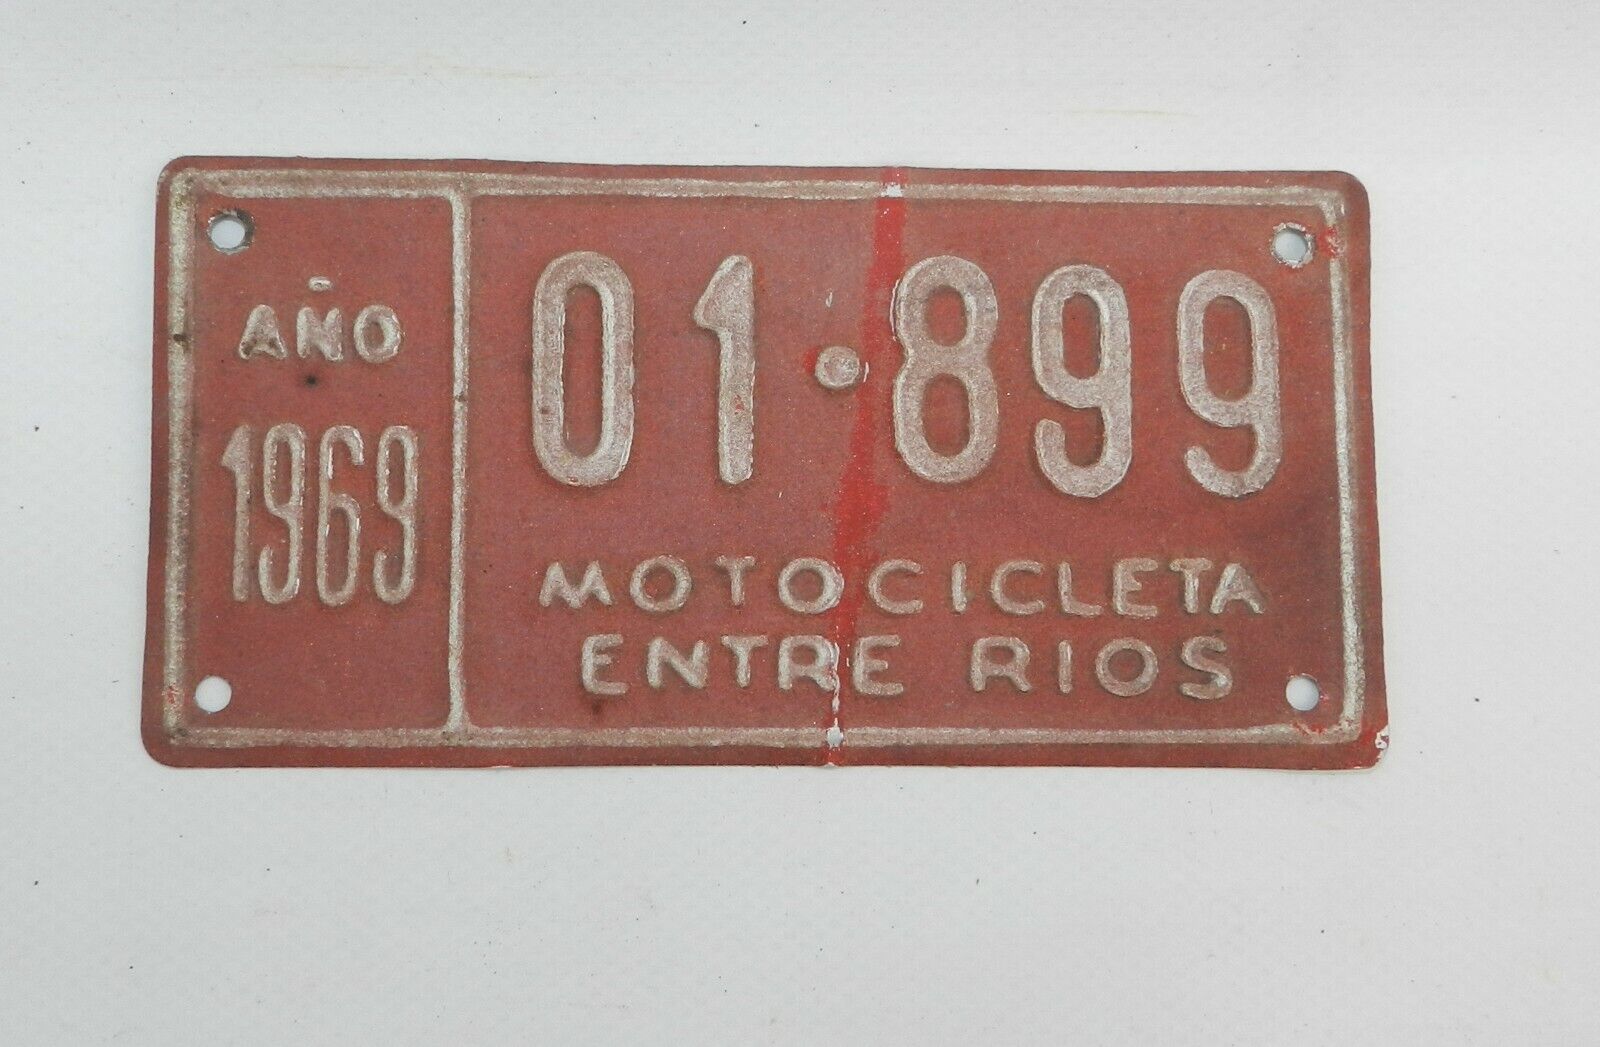 VINTAGE ENTRE RIOS ARGENTINA BIKE LICENSE PLATE DECO AUTOMOBILIA MOTORCYCLE 1969